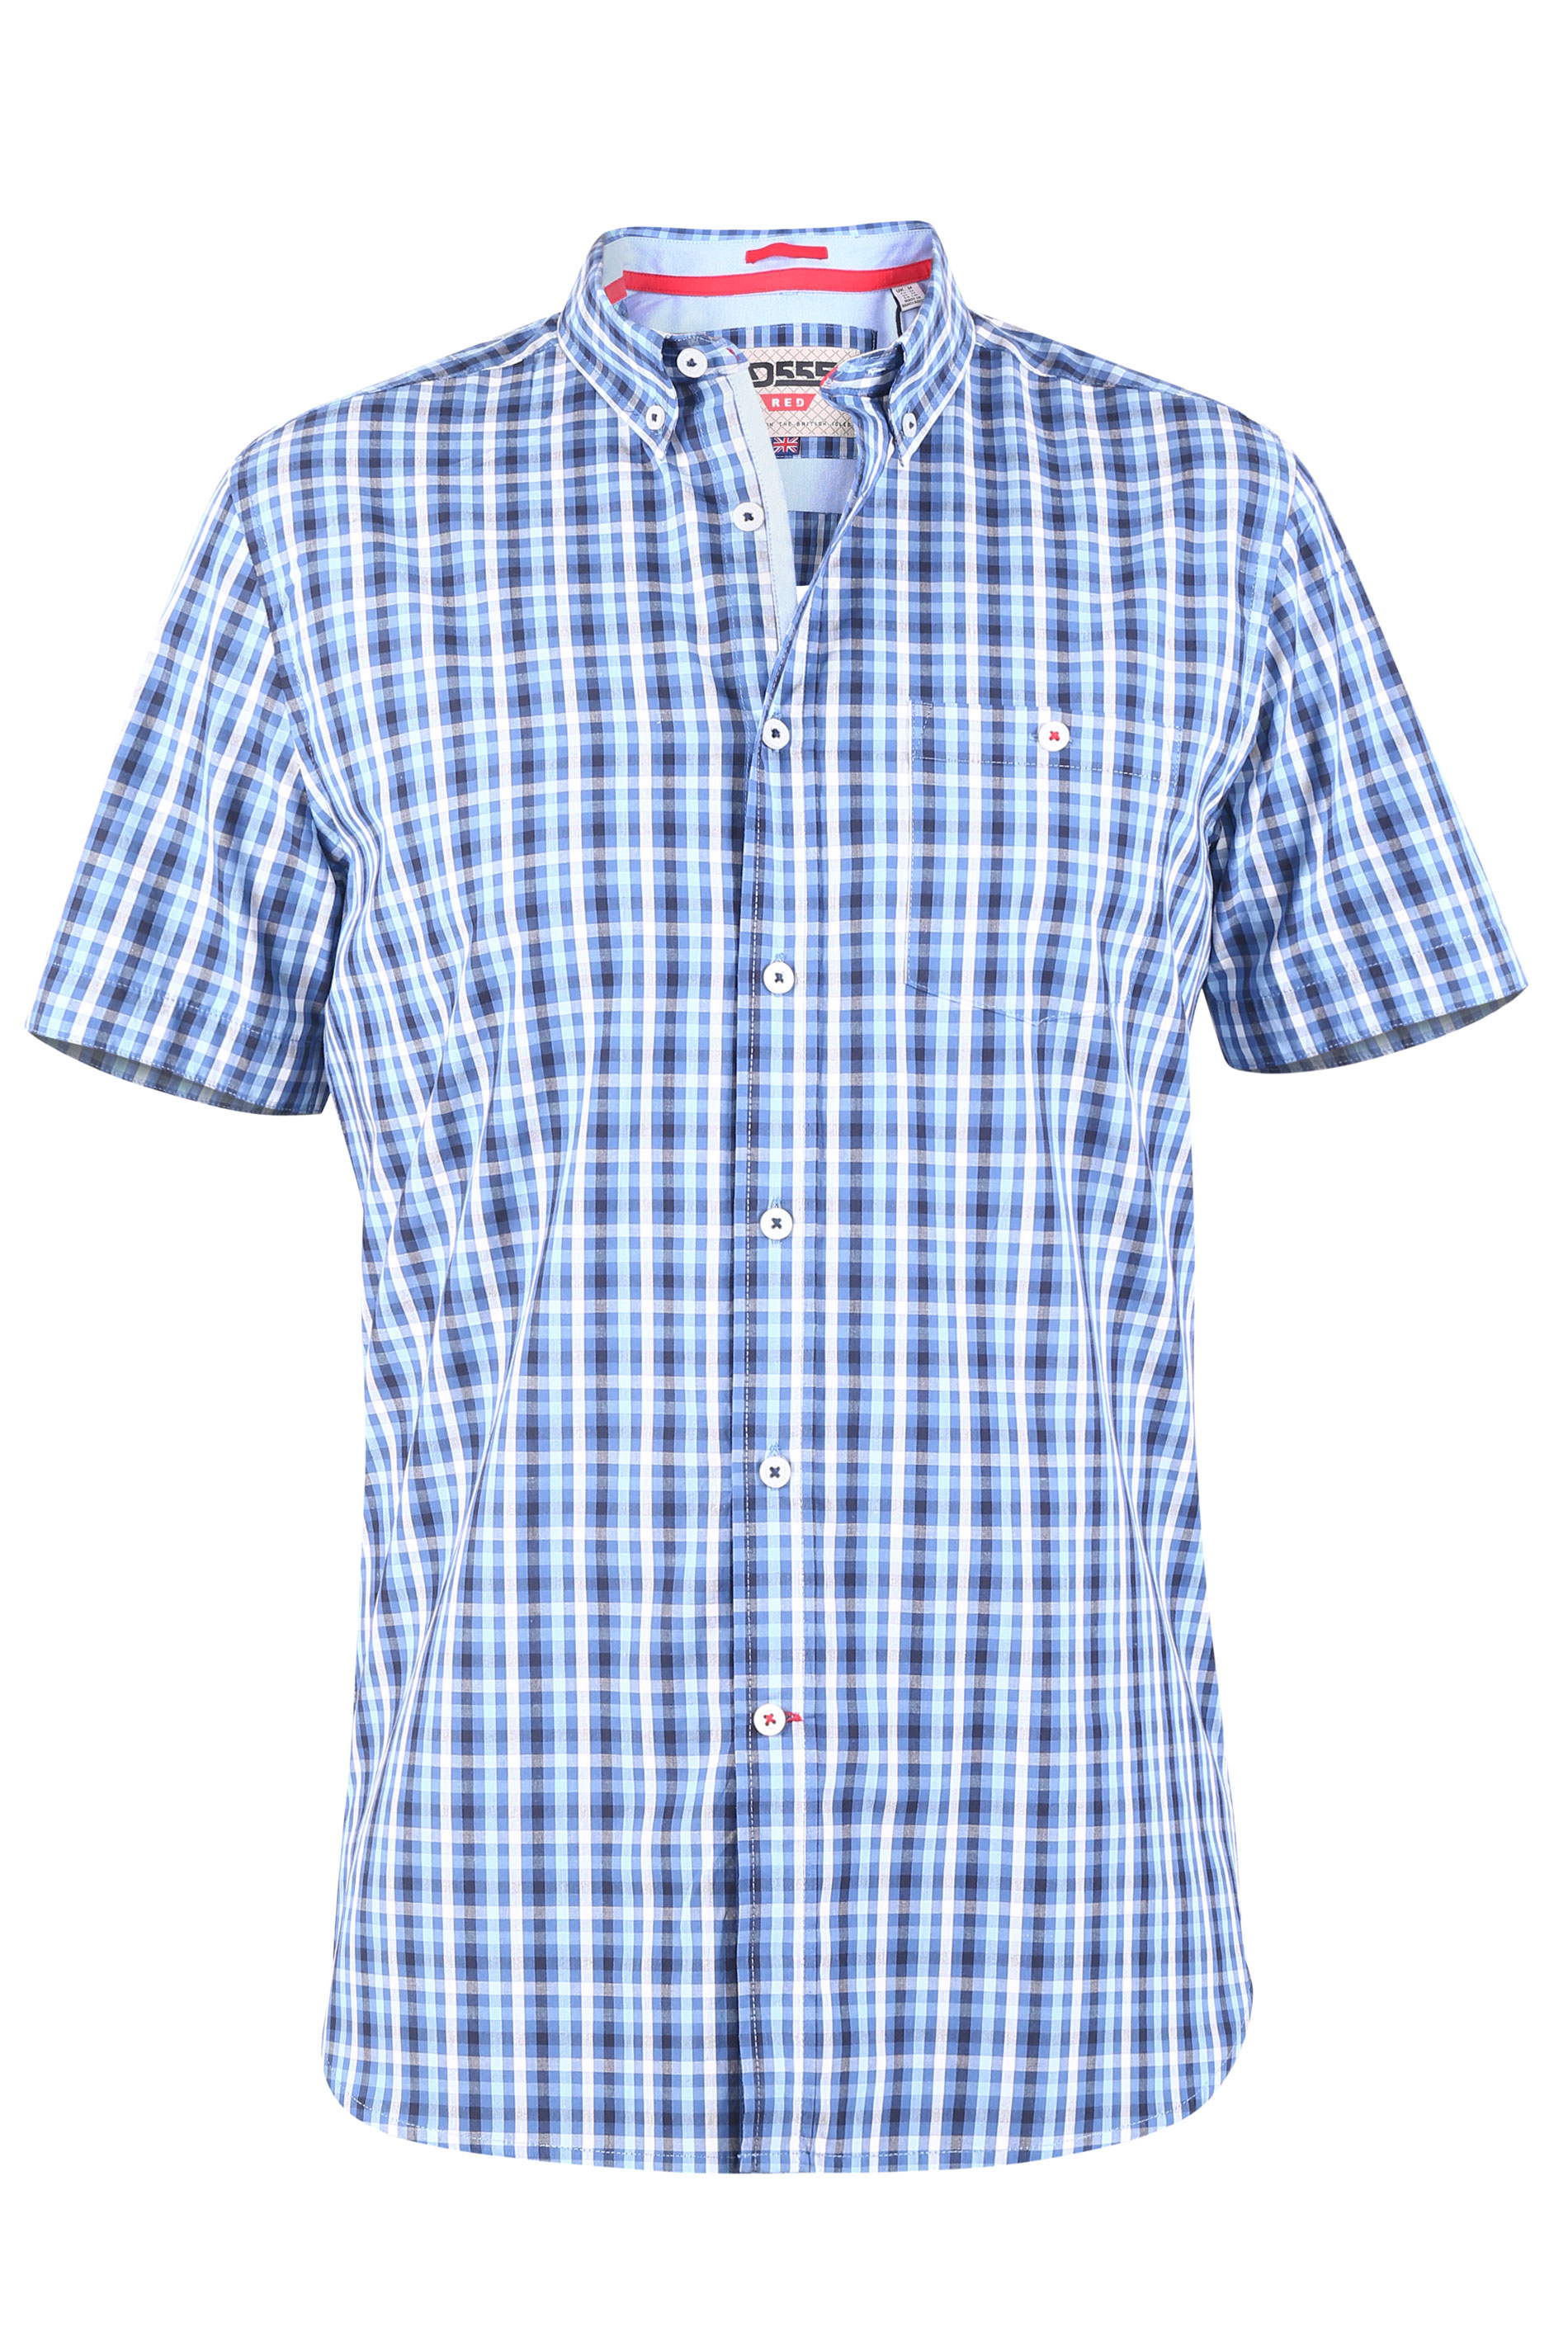 D555 Big & Tall Blue Check Short Sleeve Shirt_F.jpg